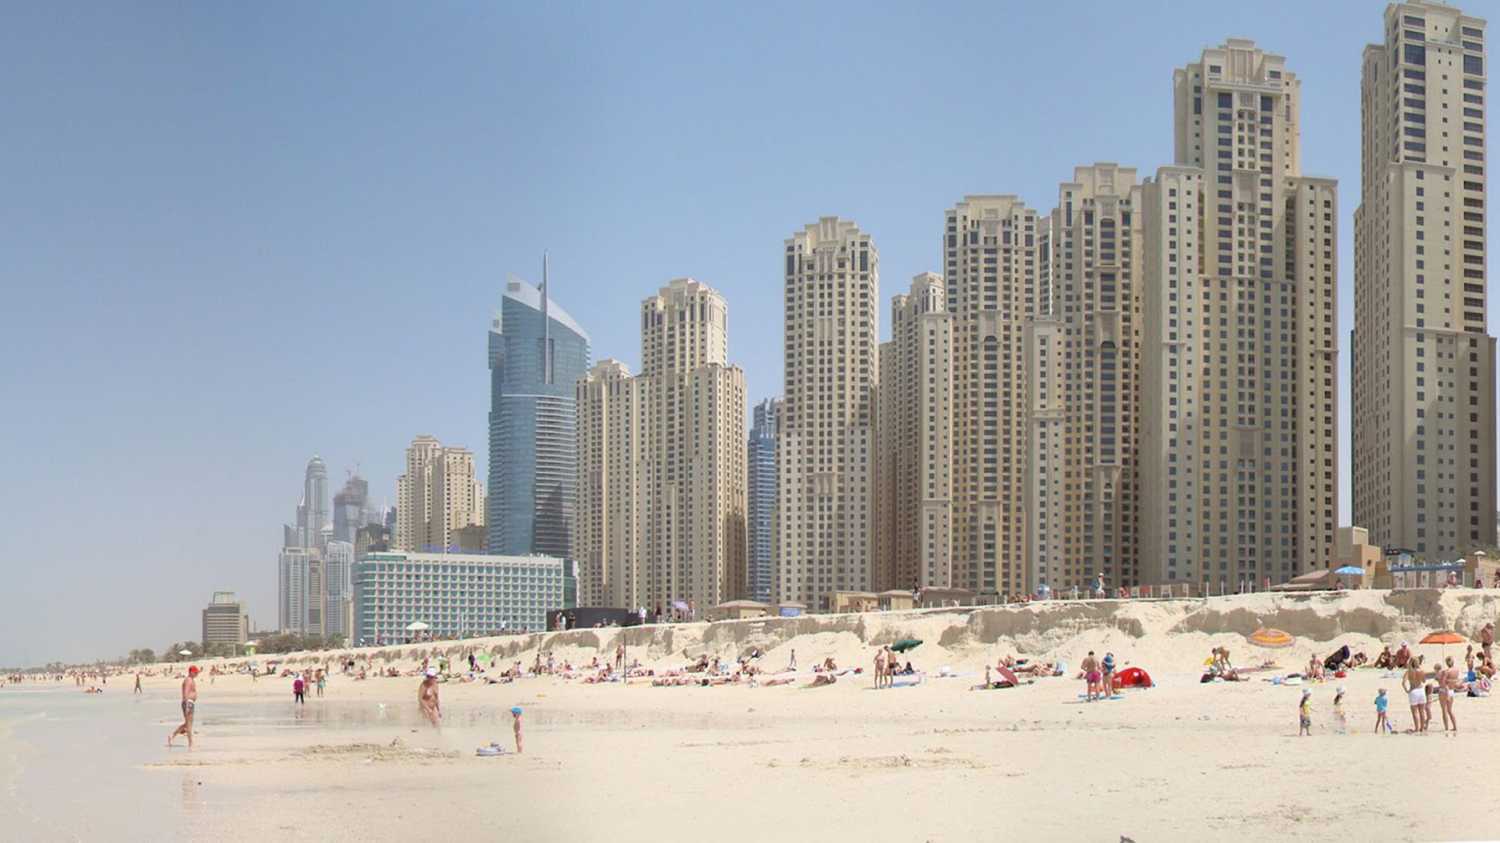 Marina Beach in Dubai – the main beach in Dubai